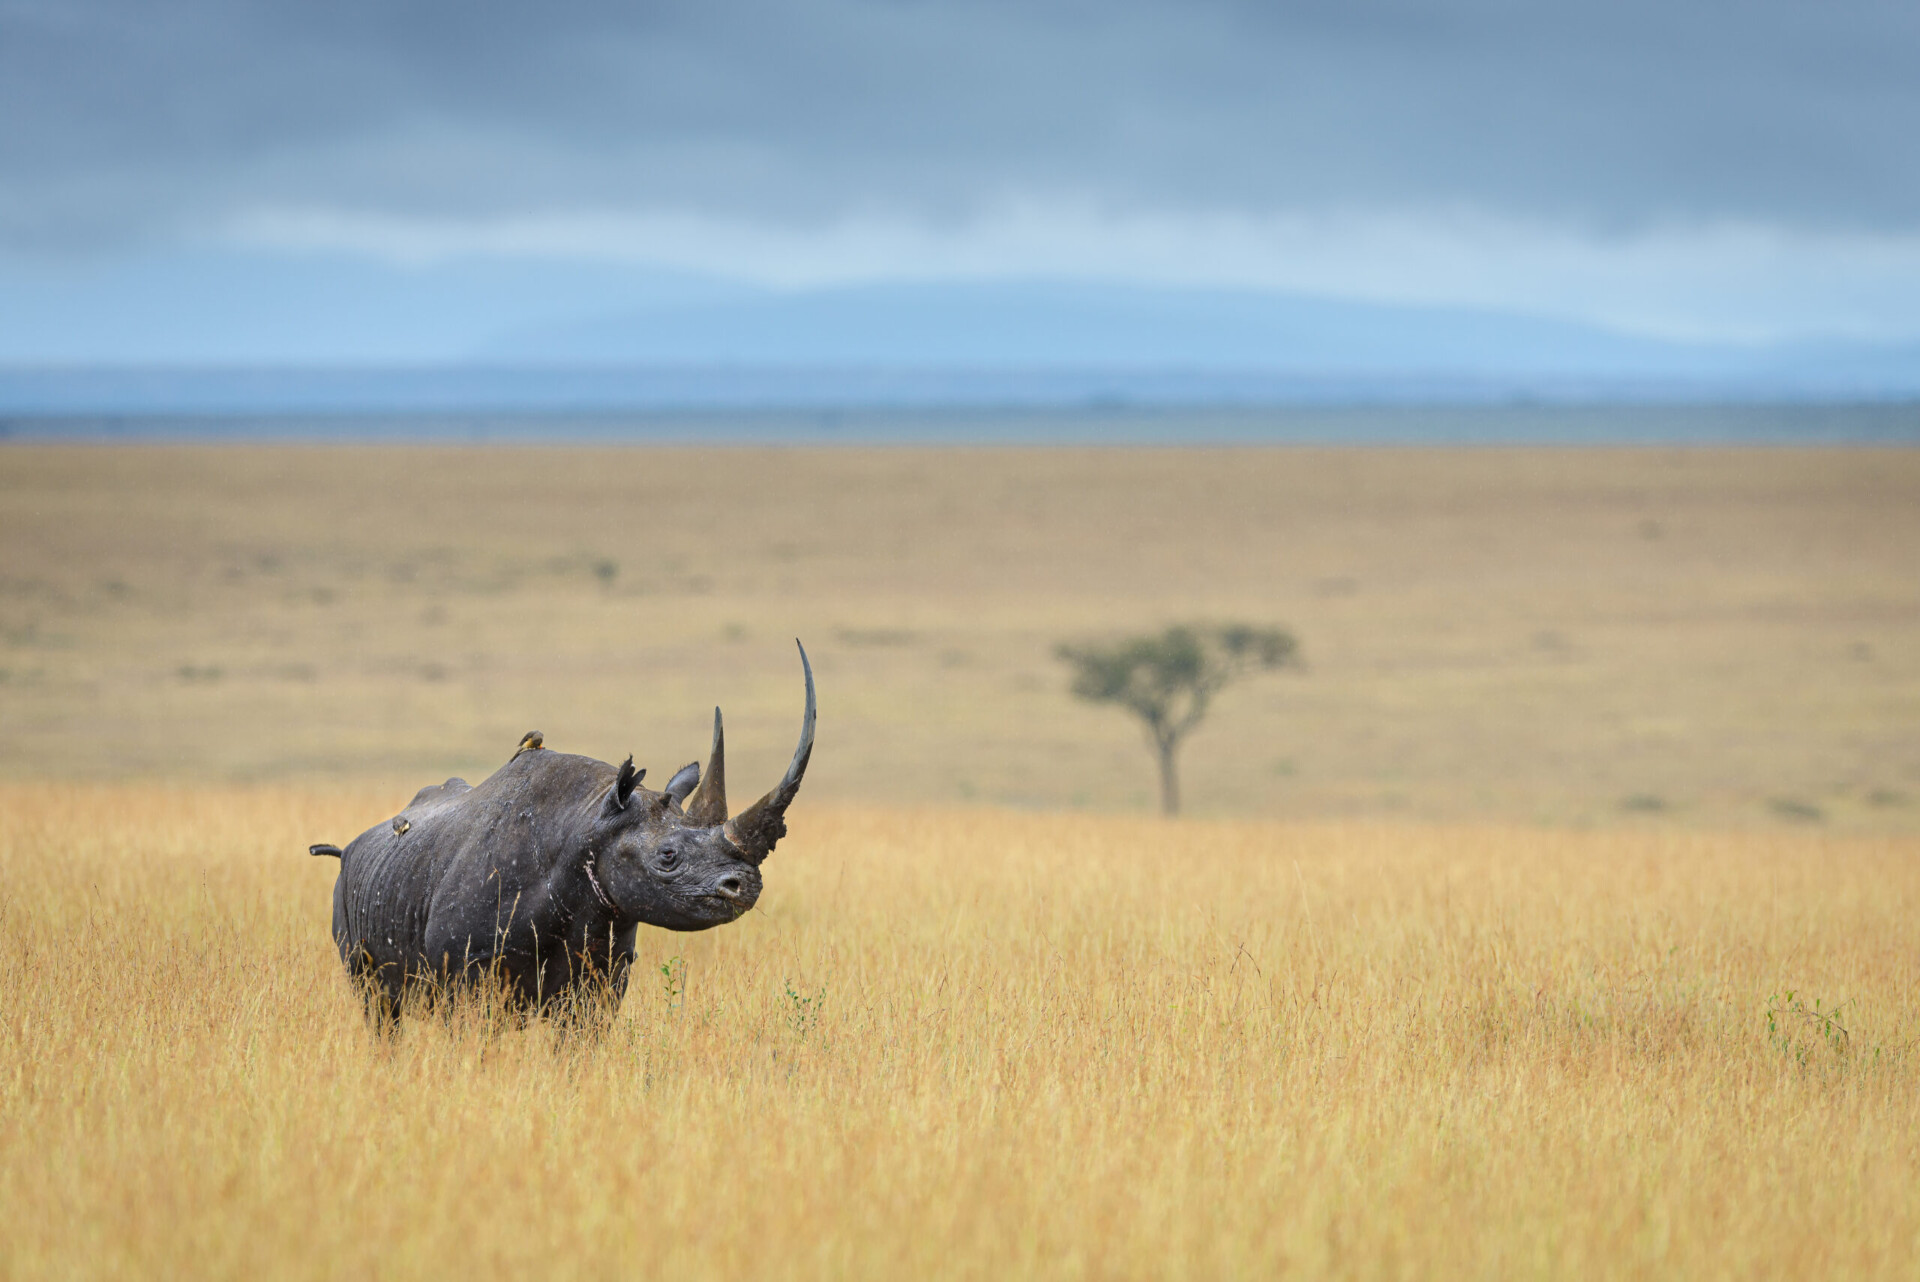 newbig5-David-Lloyd.-Black-Rhinoceros.-Status-Critically-Endangered.-Maasai-Mara-National-Reserve-Kenya--960x641@2x.jpg